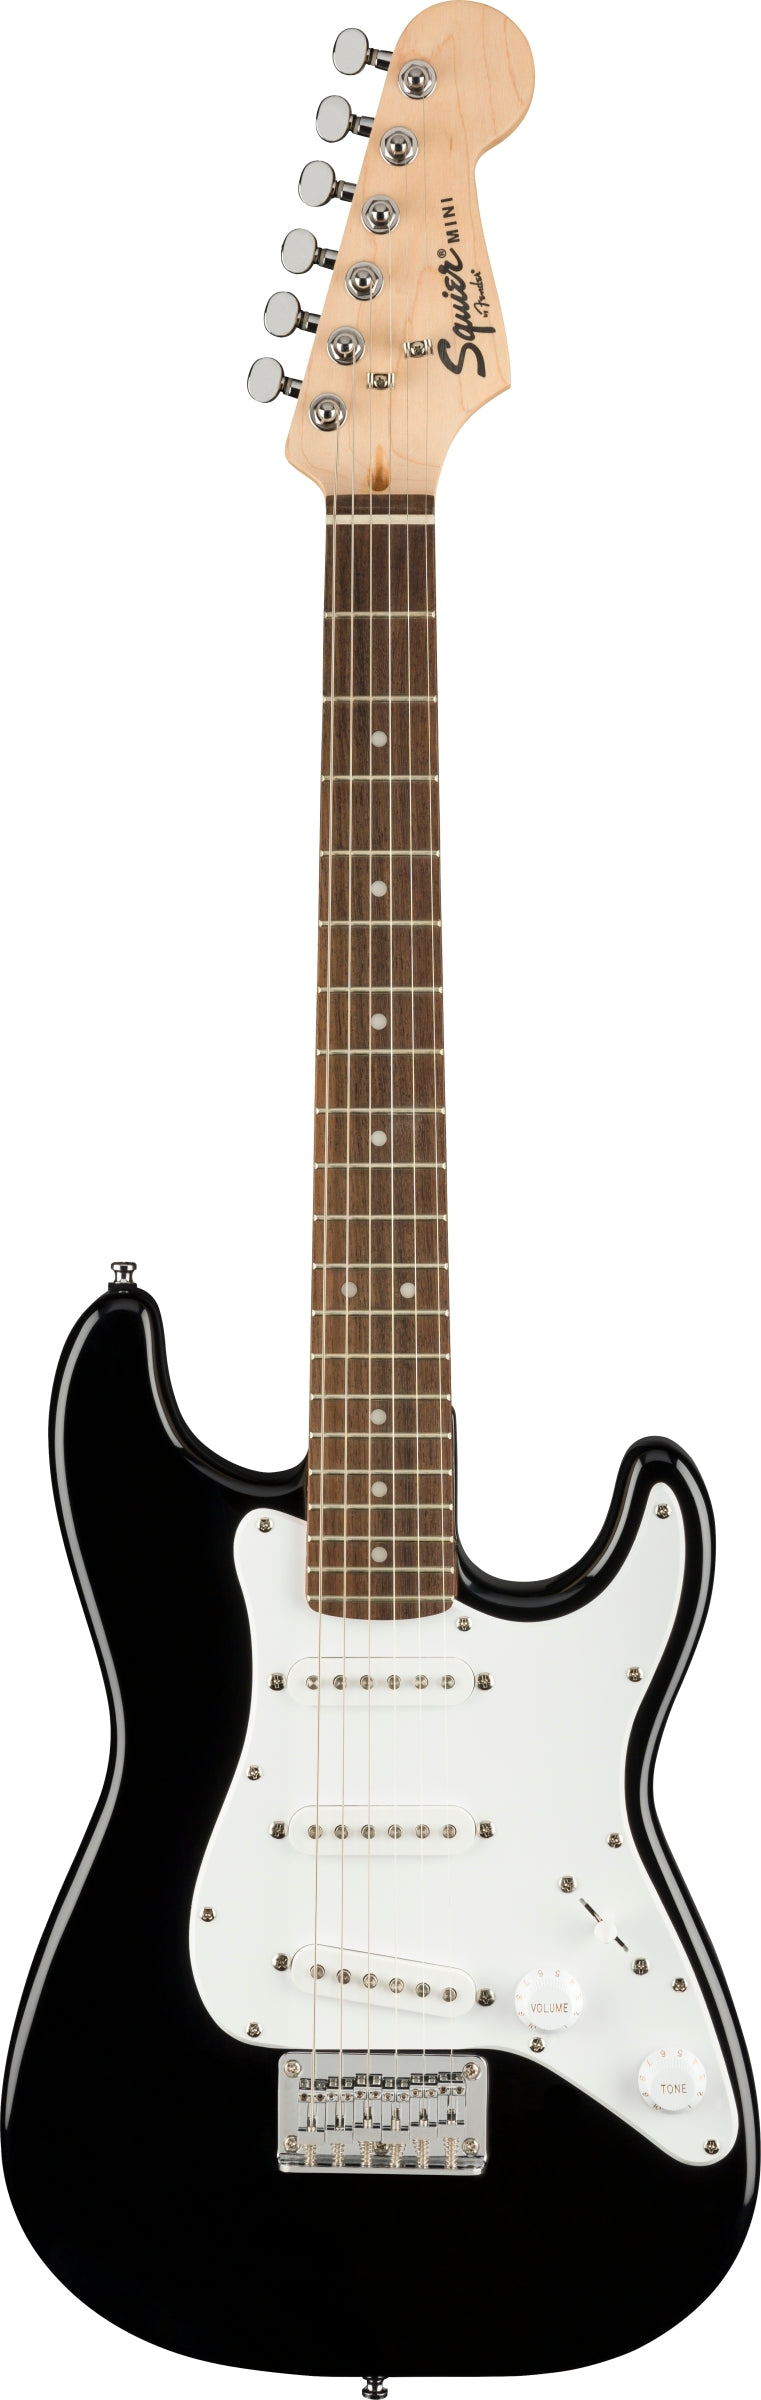 Fender Squier Mini Stratocaster, Black